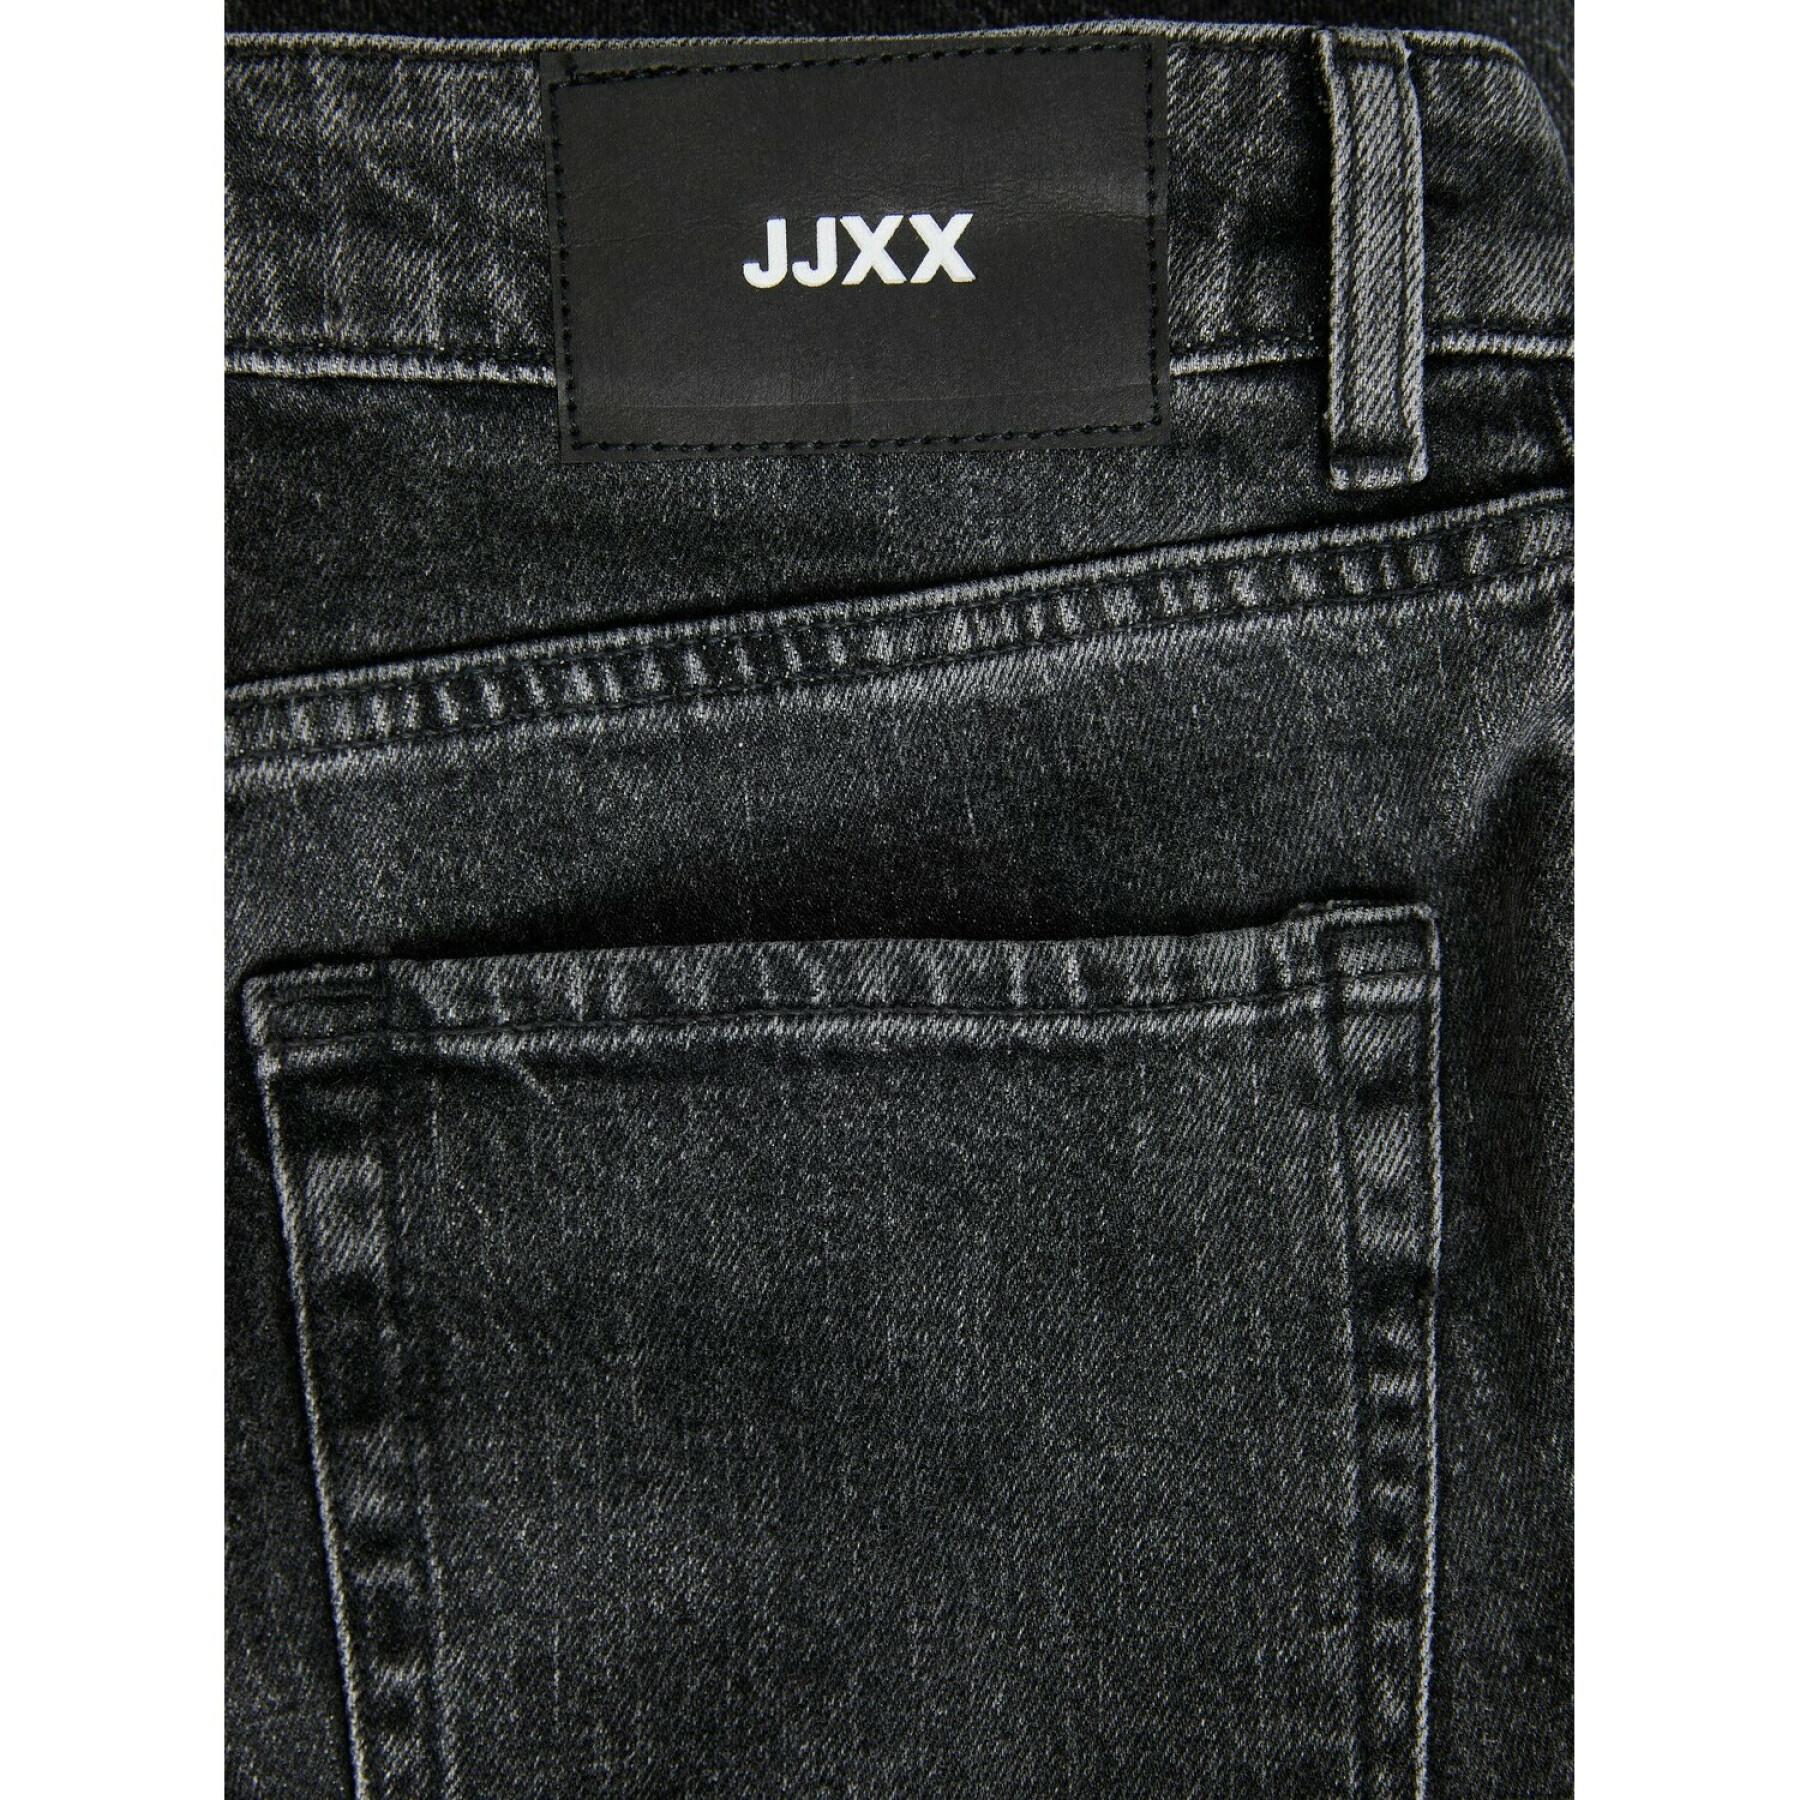 Jeans straight femme JJXX seoul cc3004